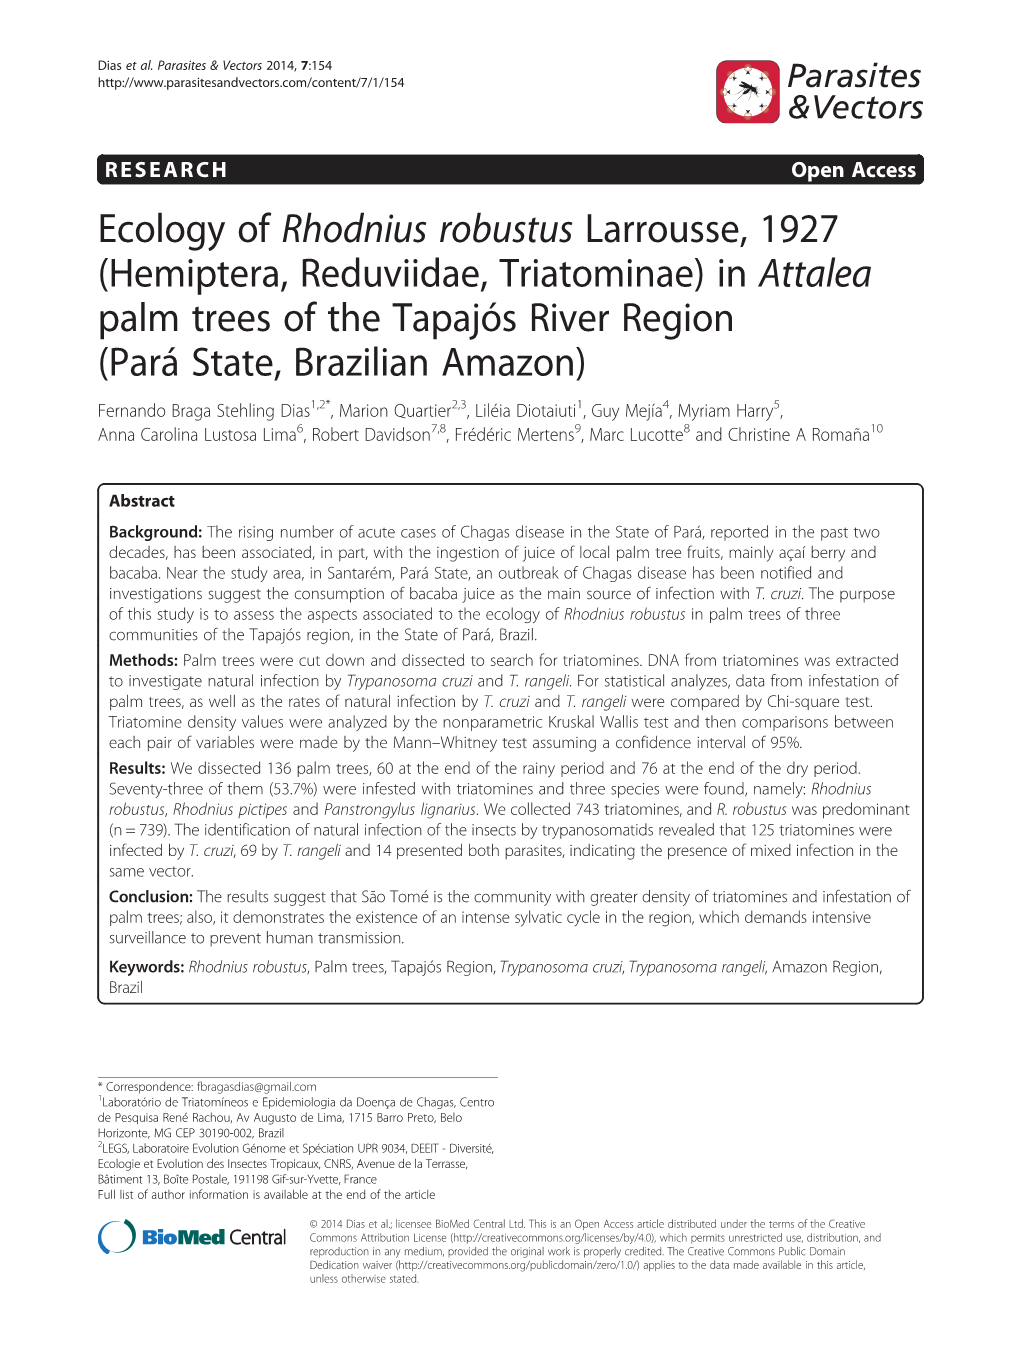 Ecology of Rhodnius Robustus Larrousse, 1927 (Hemiptera